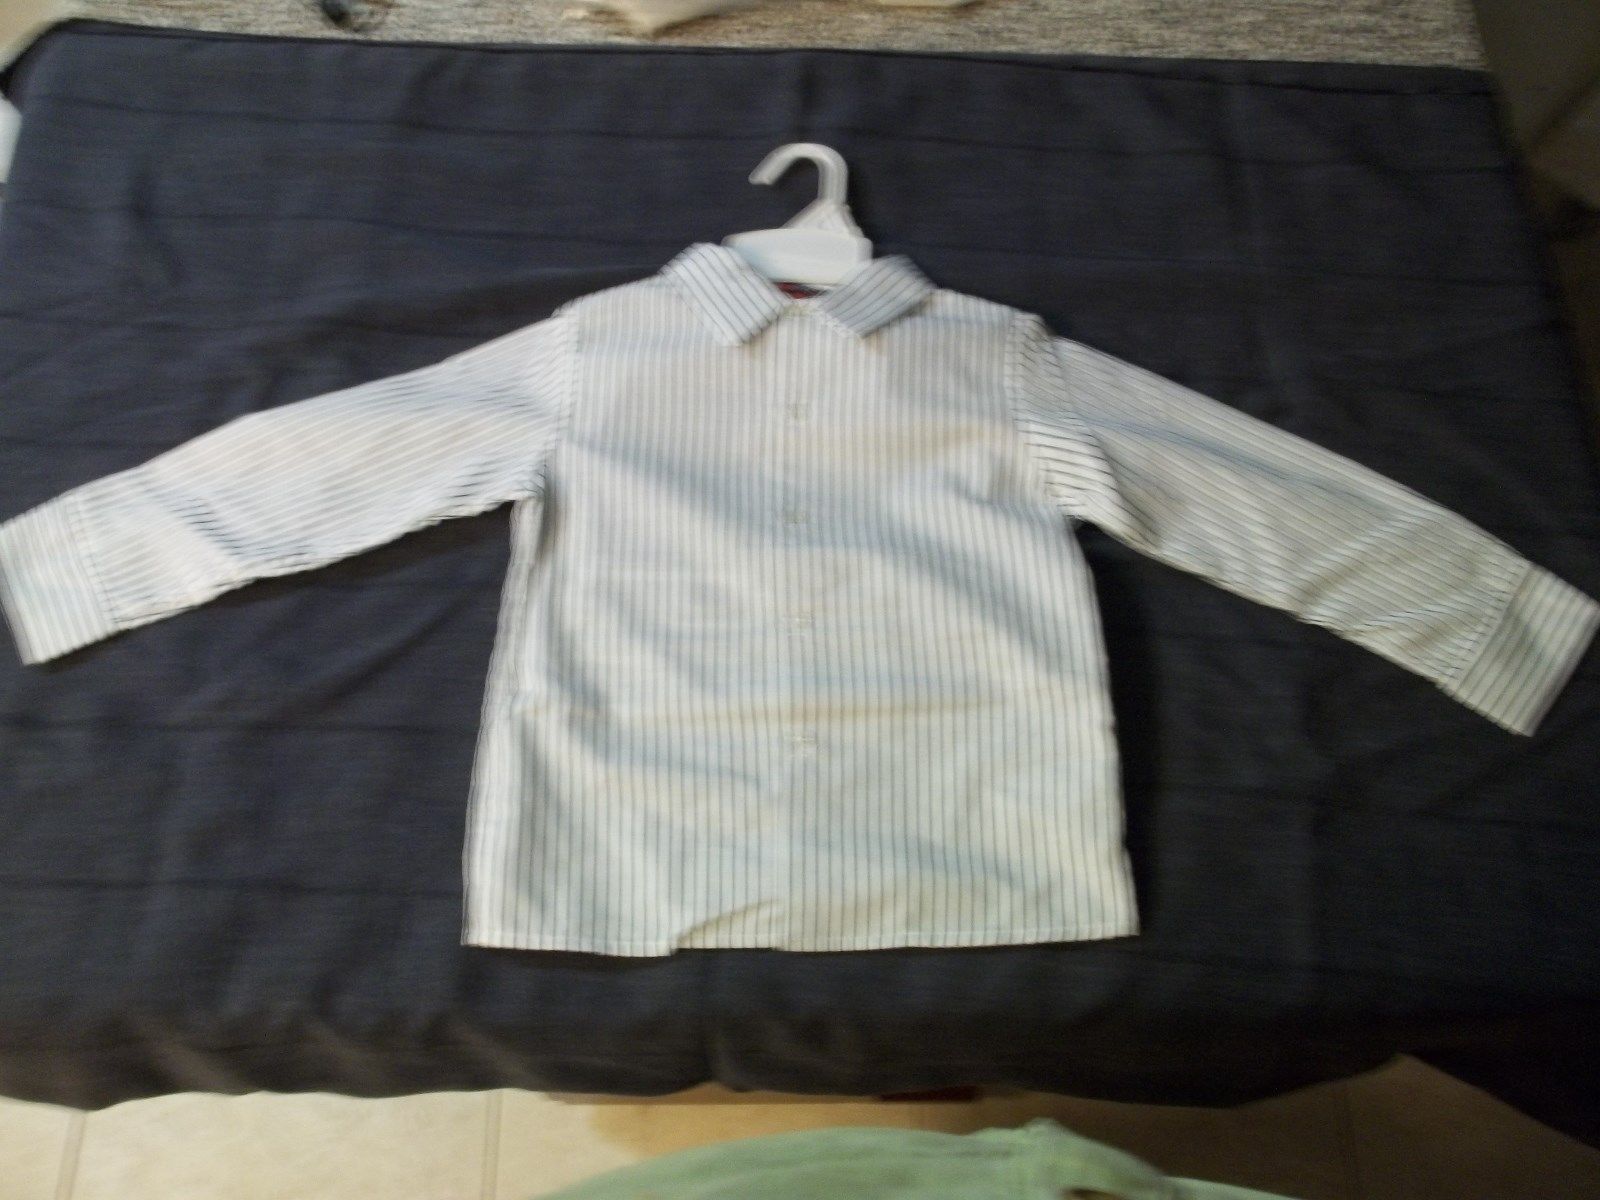 Good Lad Boys Long Sleeve Button down Shirt Size 4 - $10.00